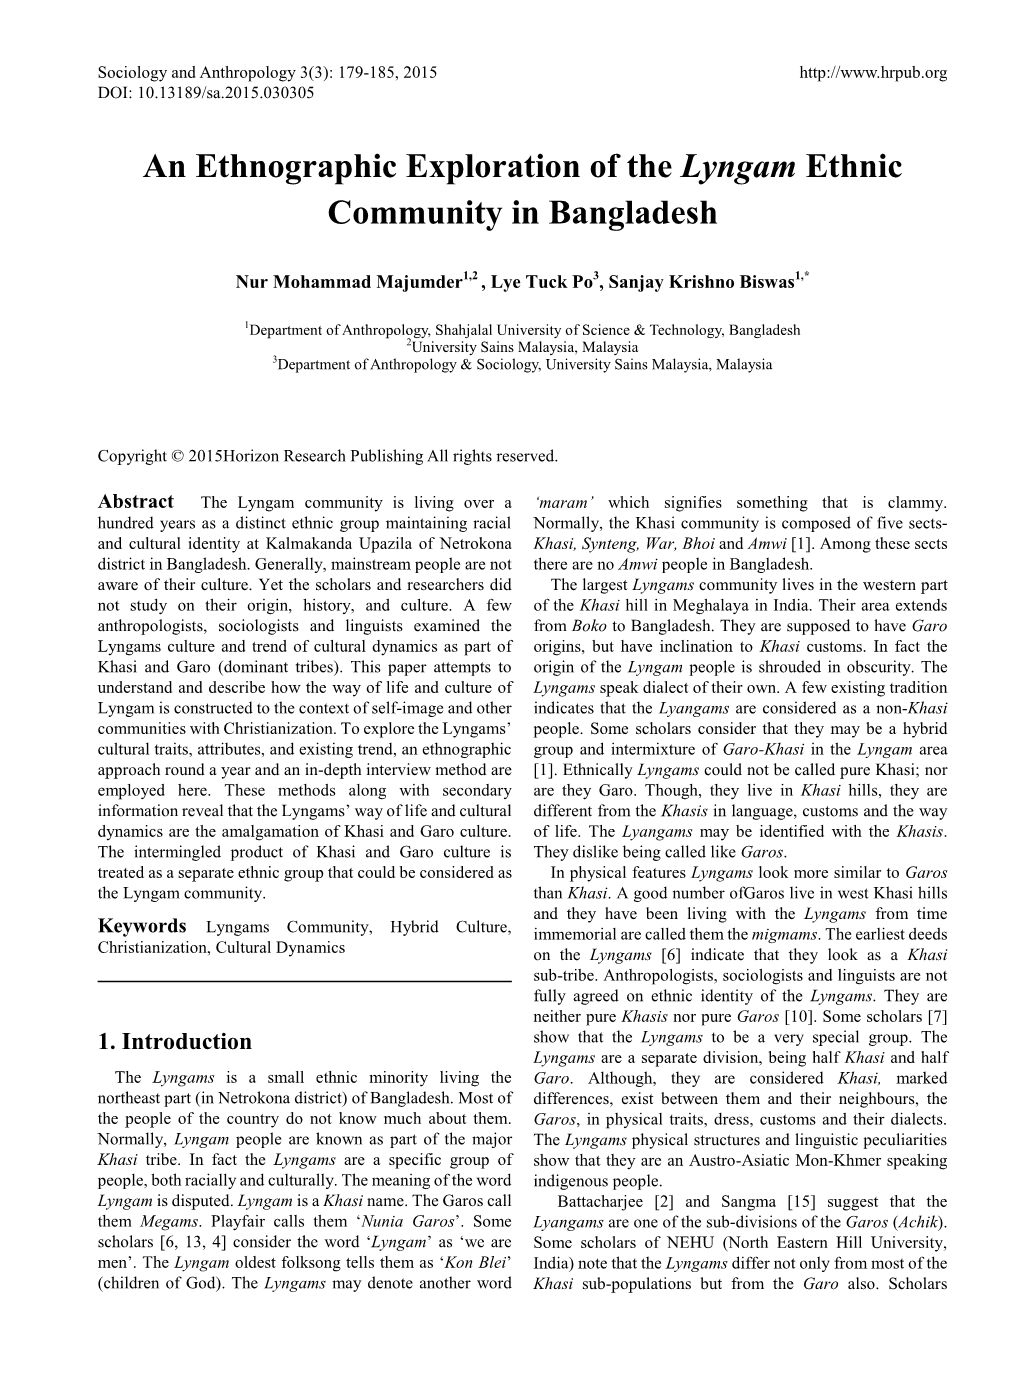 An Ethnographic Exploration of the Lyngam Ethnic Community in Bangladesh